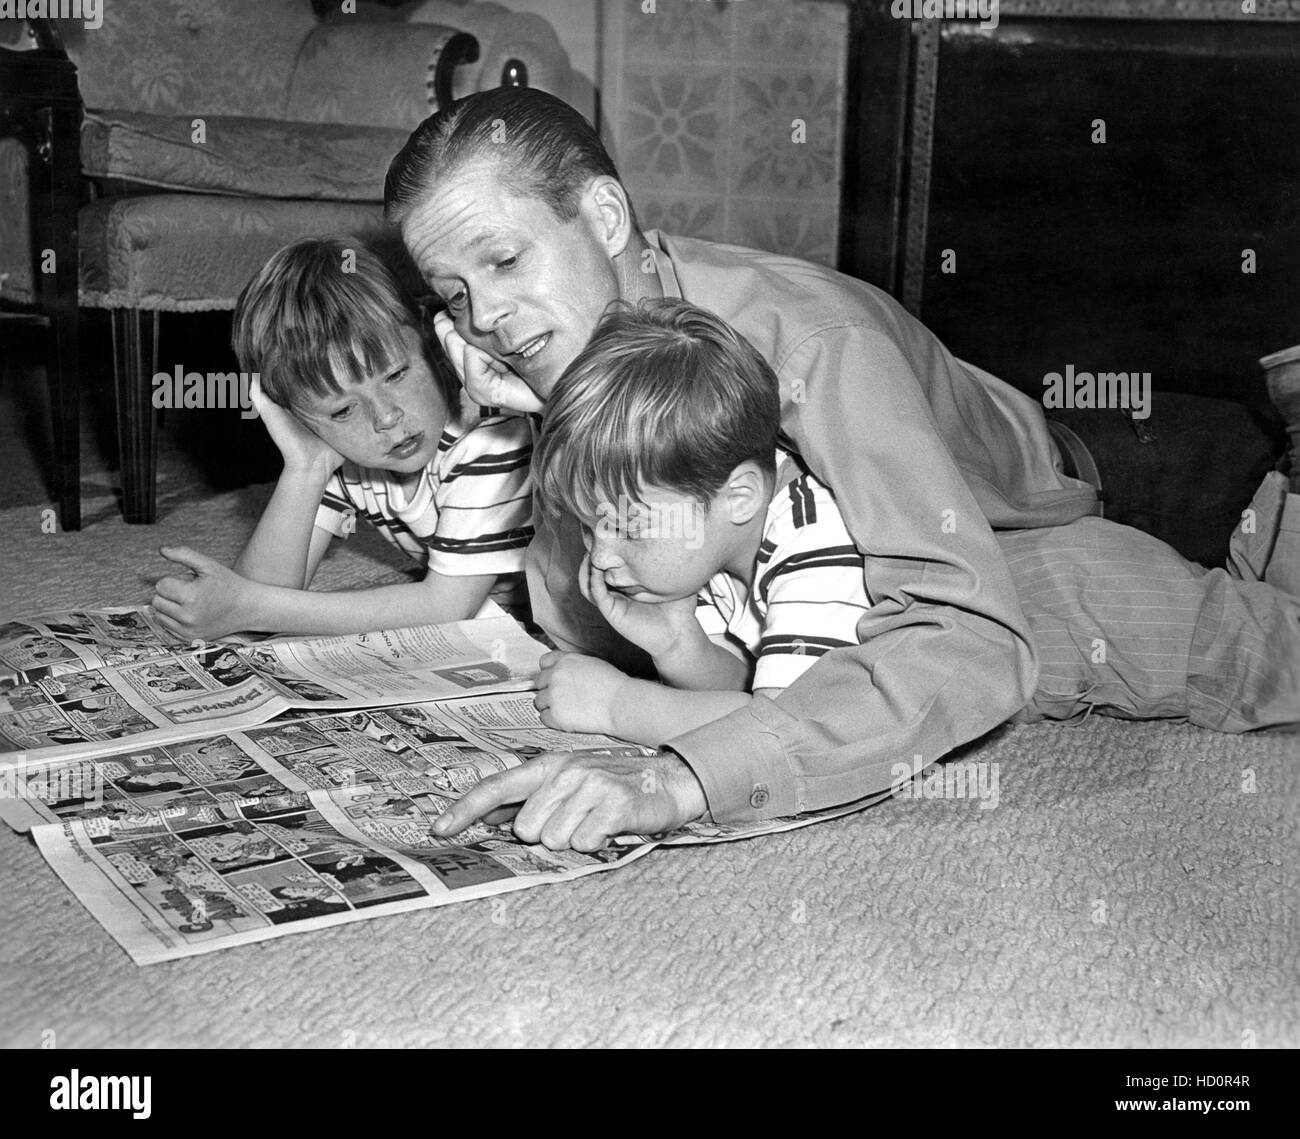 Dan Duryea (center) reading comics with sons Peter Duryea (right) and Richard Duryea (left), 1947 Stock Photo